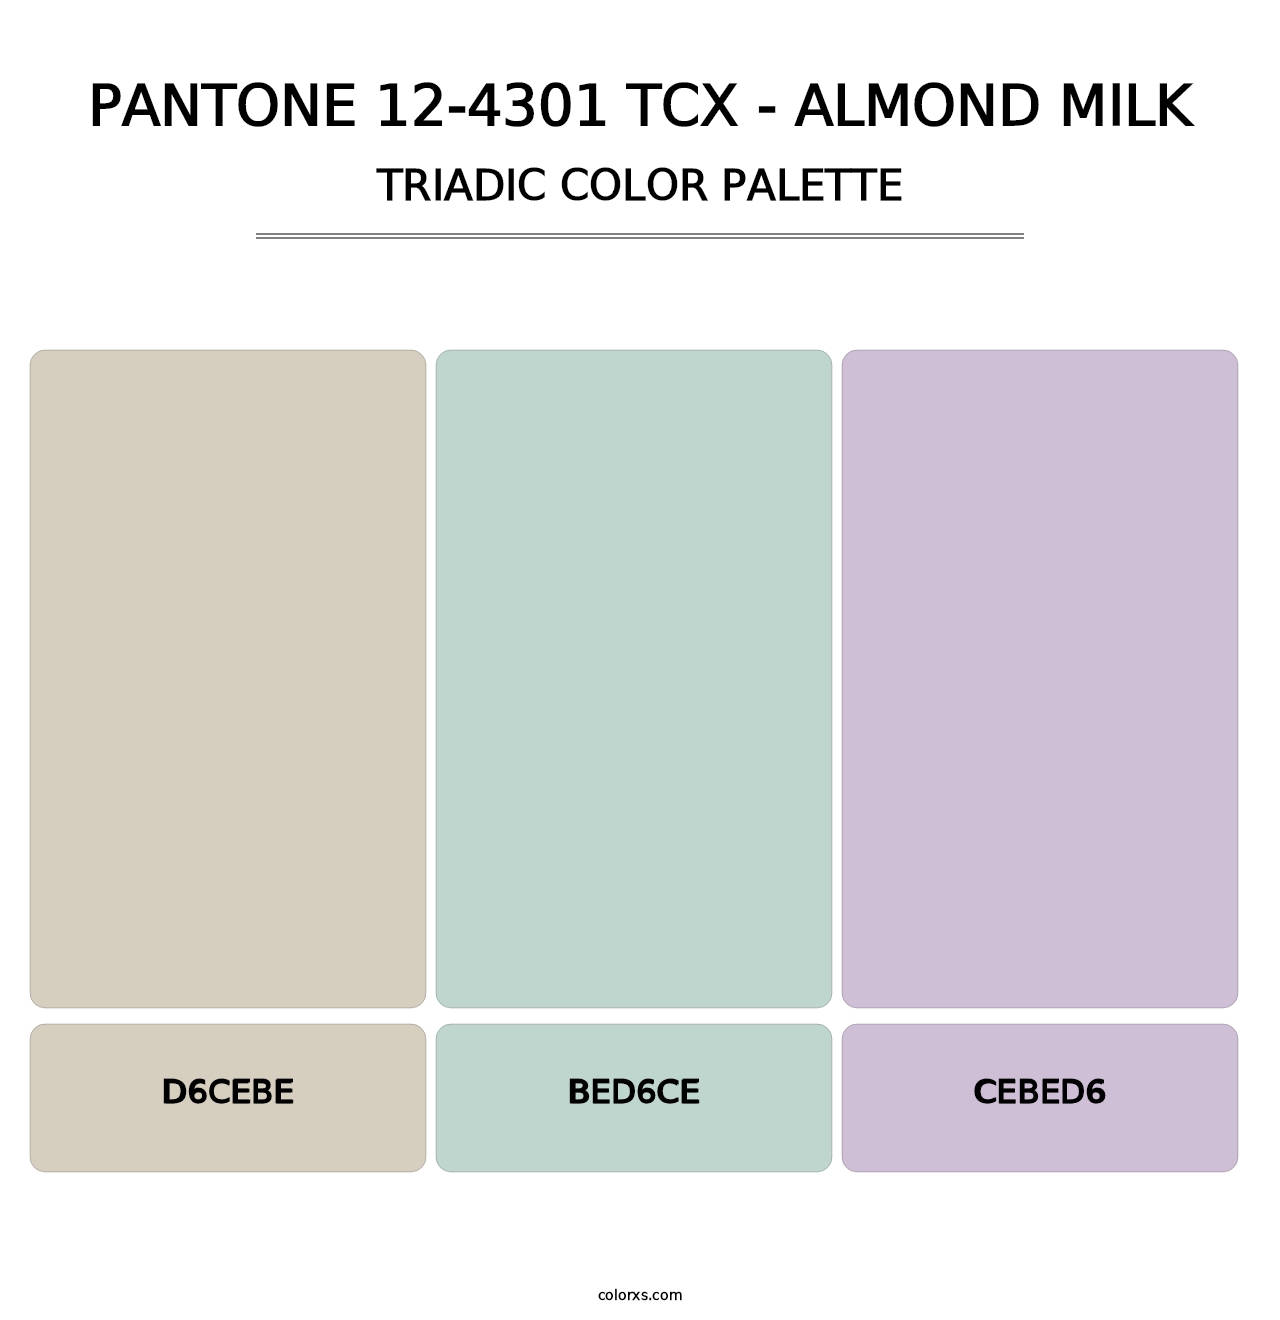 PANTONE 12-4301 TCX - Almond Milk - Triadic Color Palette